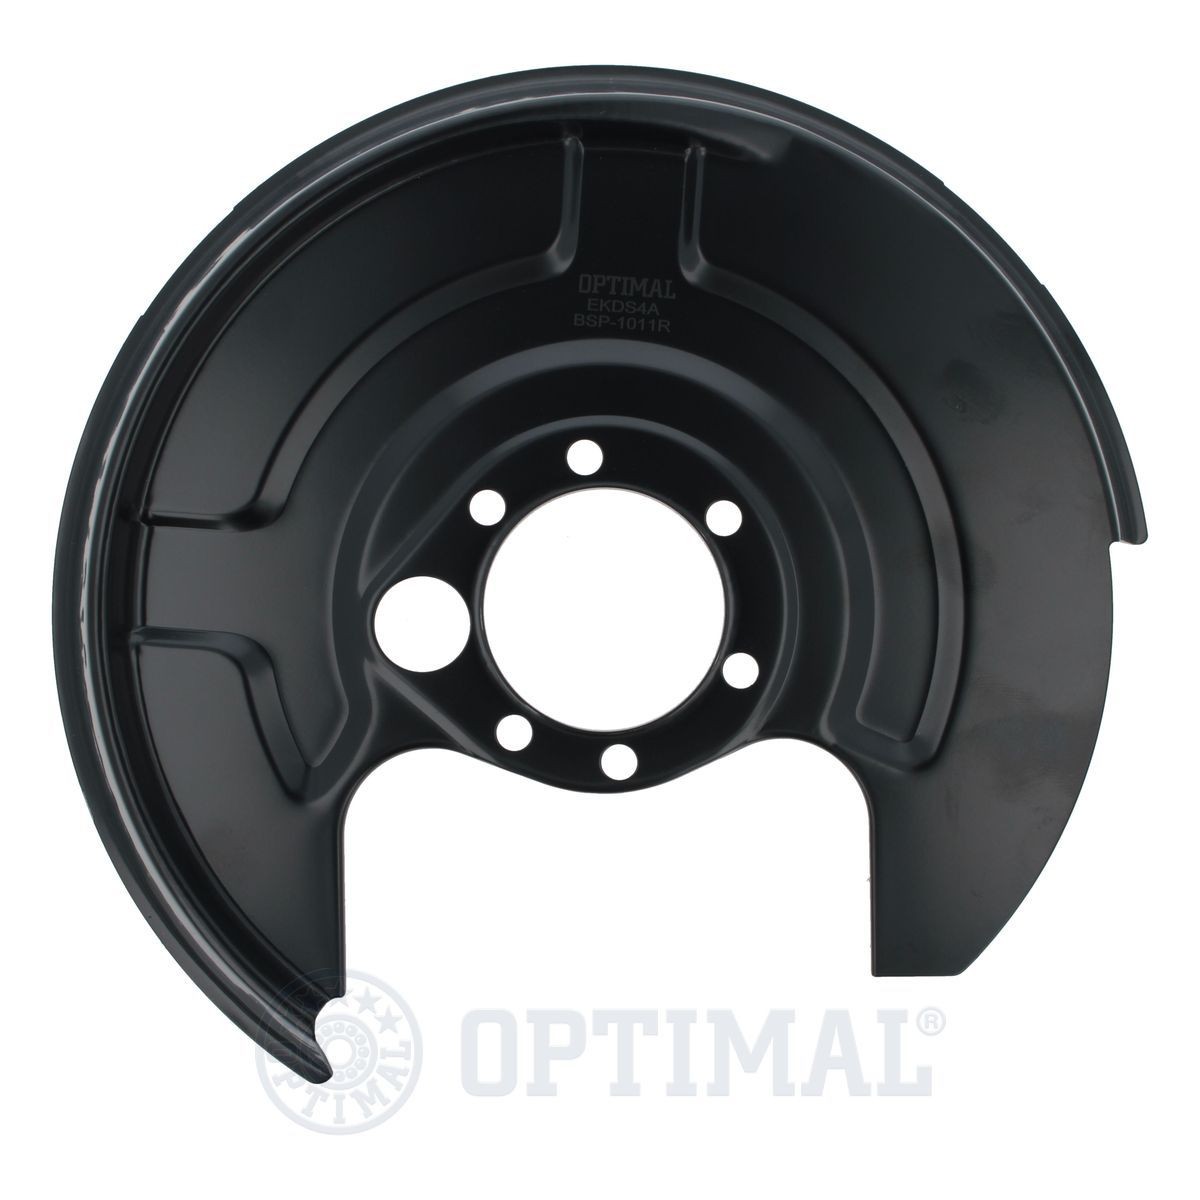 OPTIMAL Rear Axle Right Brake Disc Back Plate BSP-1011R buy